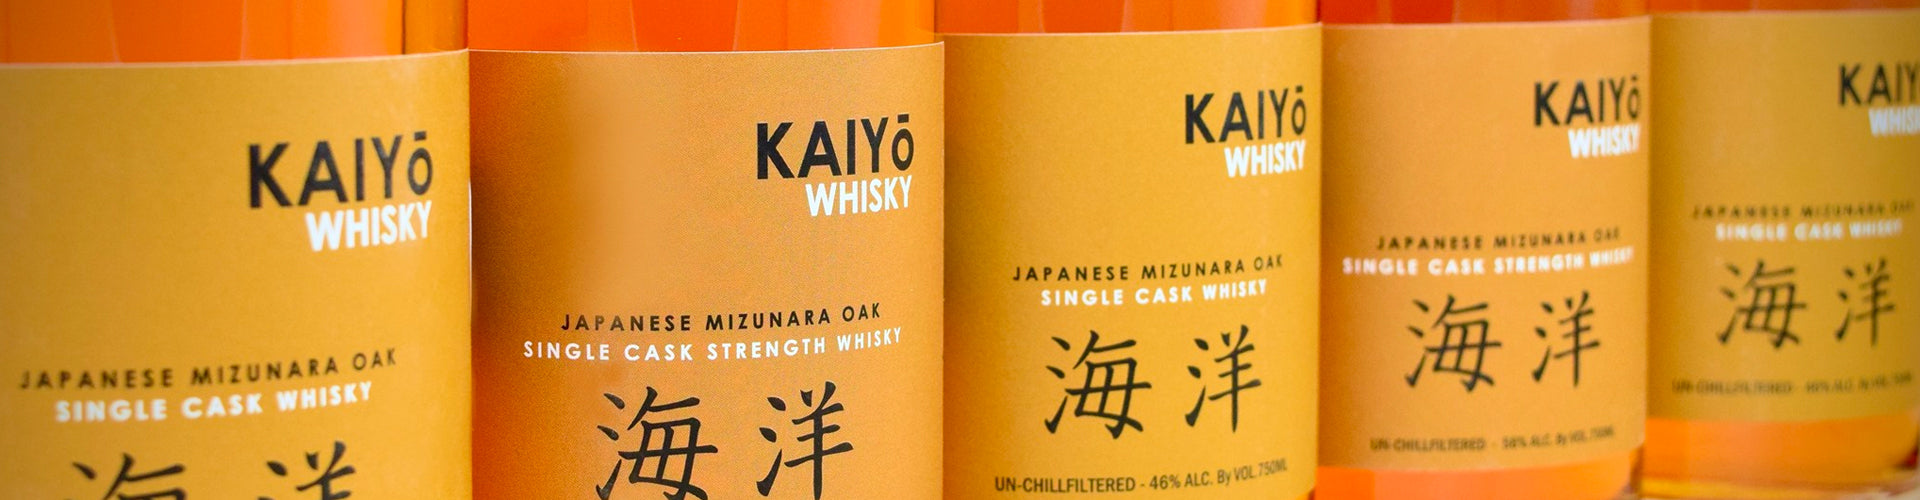 KAIYō Whisky from Japan